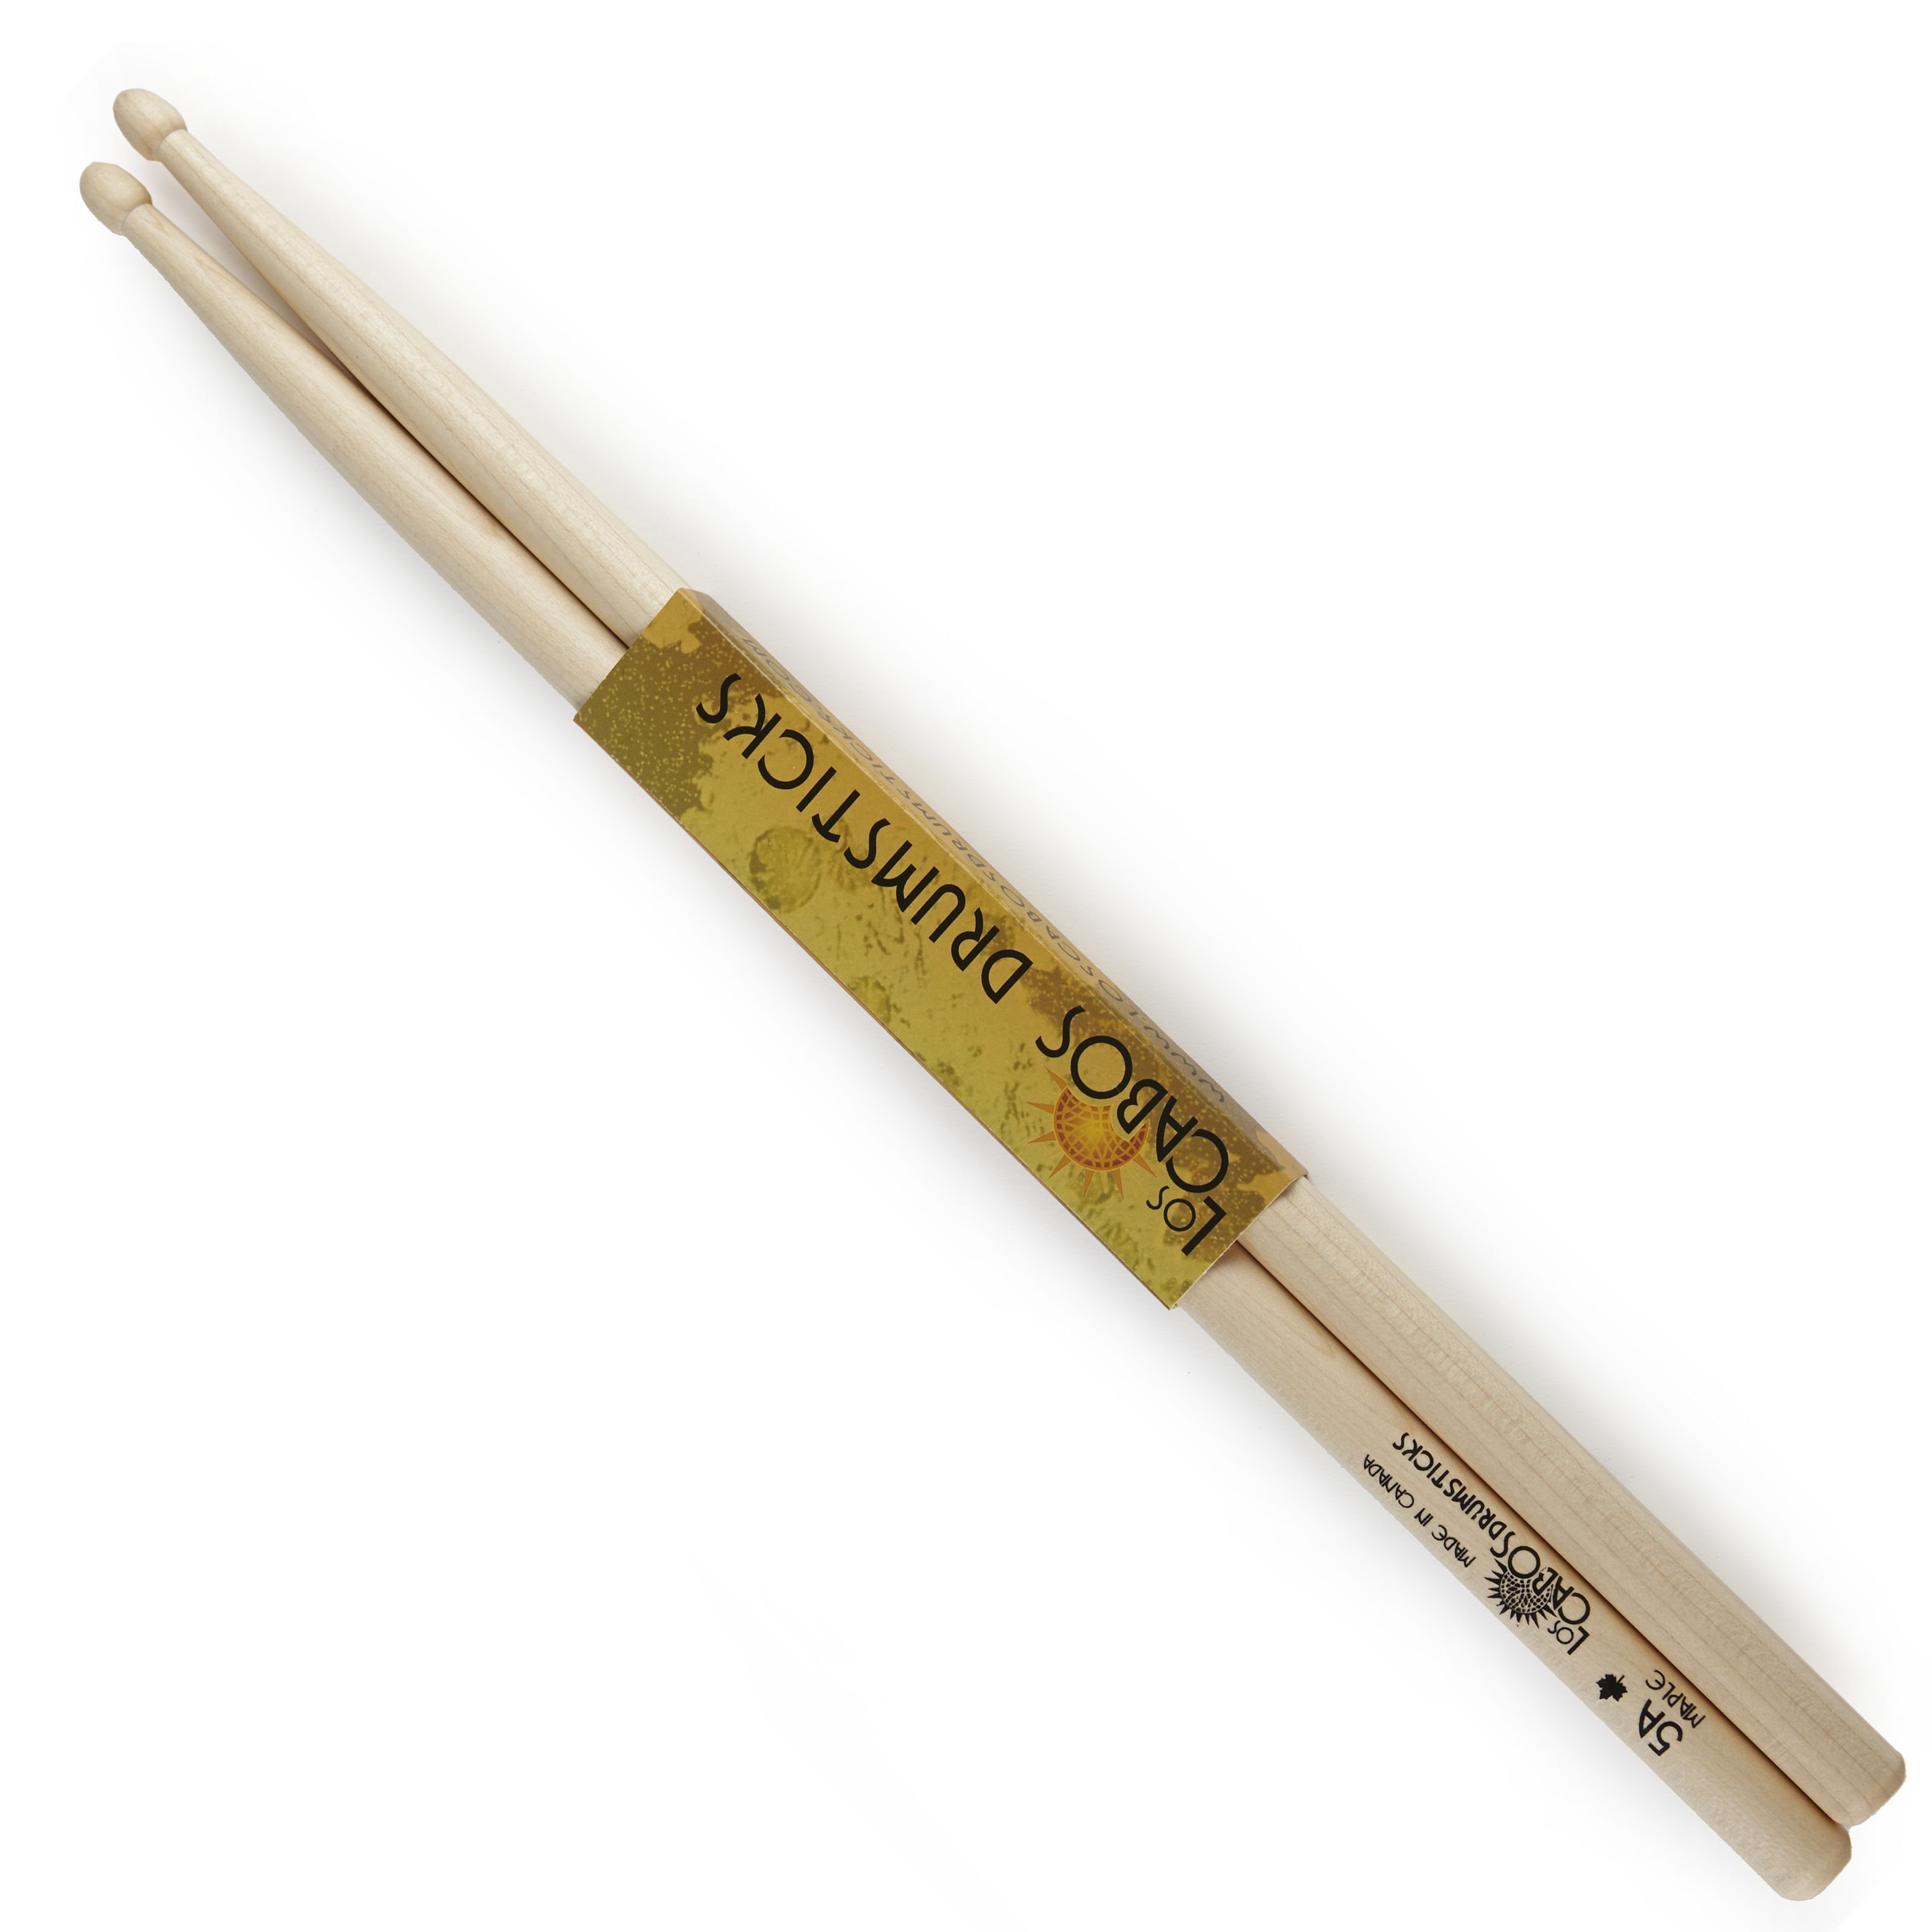 Los Cabos Drumsticks (5A Maple Sticks, Wood Tip, Sticks, Beater und Mallets, Drumsticks Holztip), 5A Maple Sticks, Wood Tip - Drumsticks